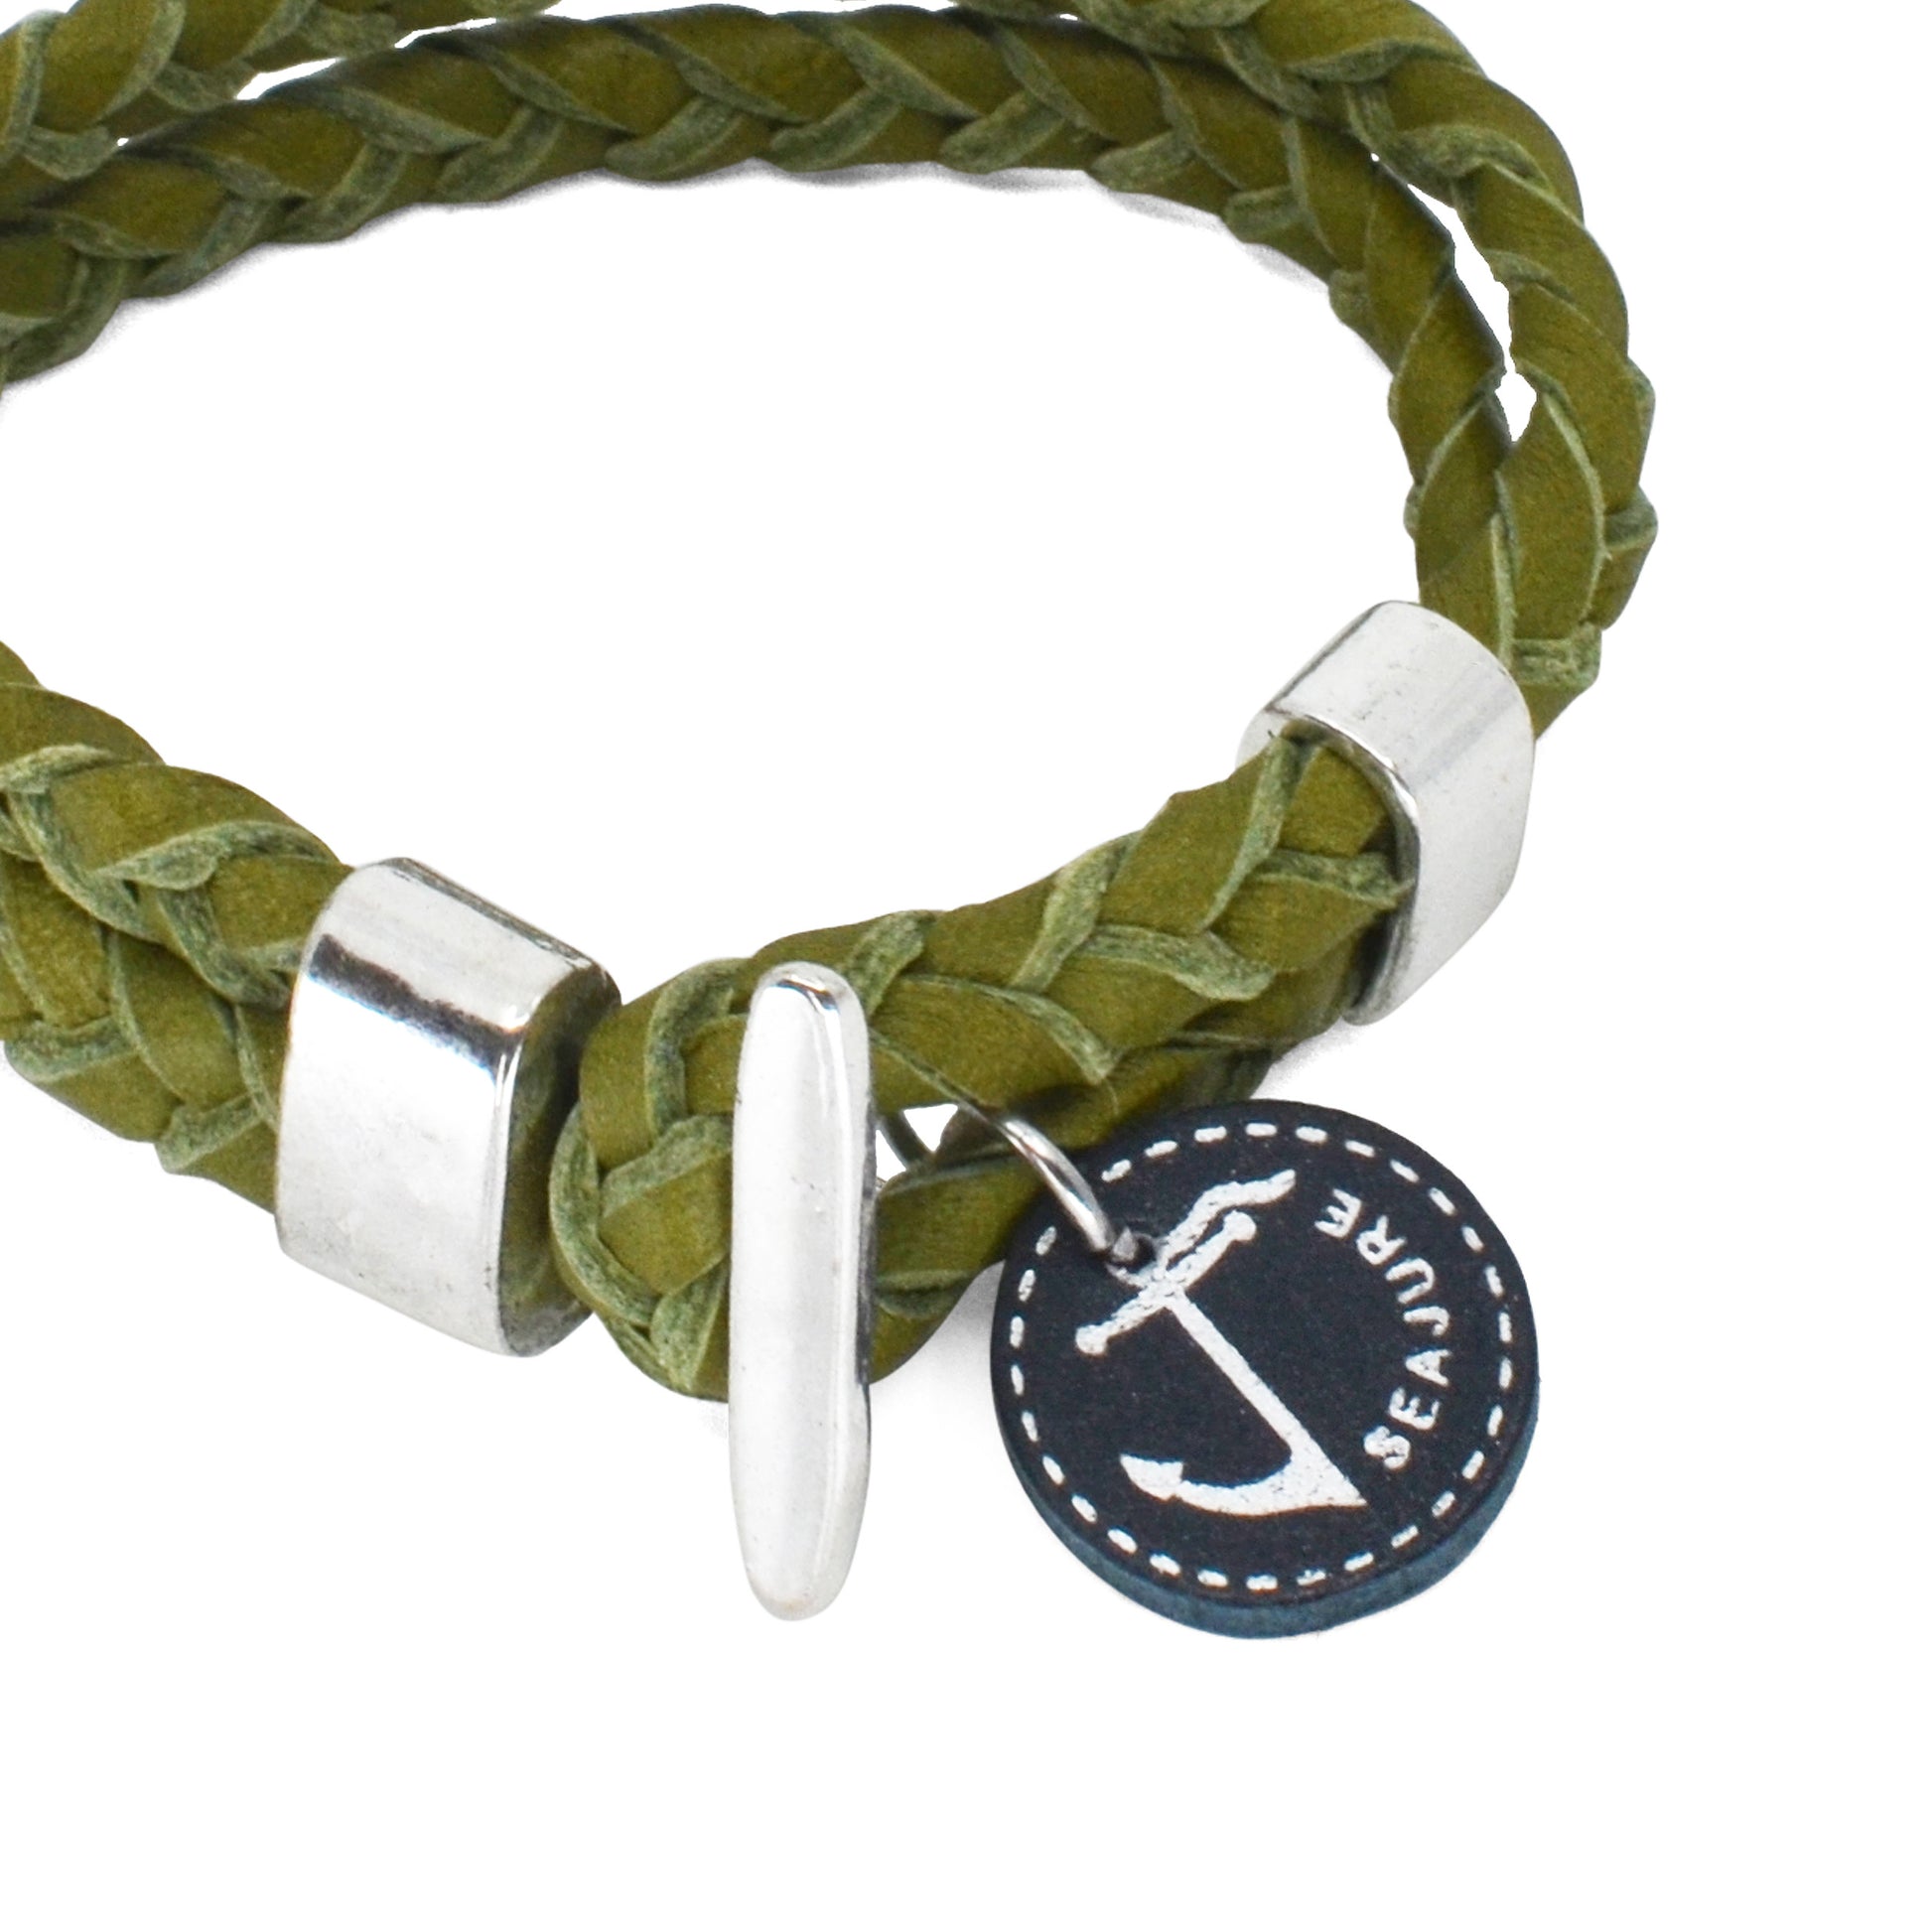 Love Anchor Fashion Woven Bracelet  Leather anchor bracelet, Leather,  Leather bracelet